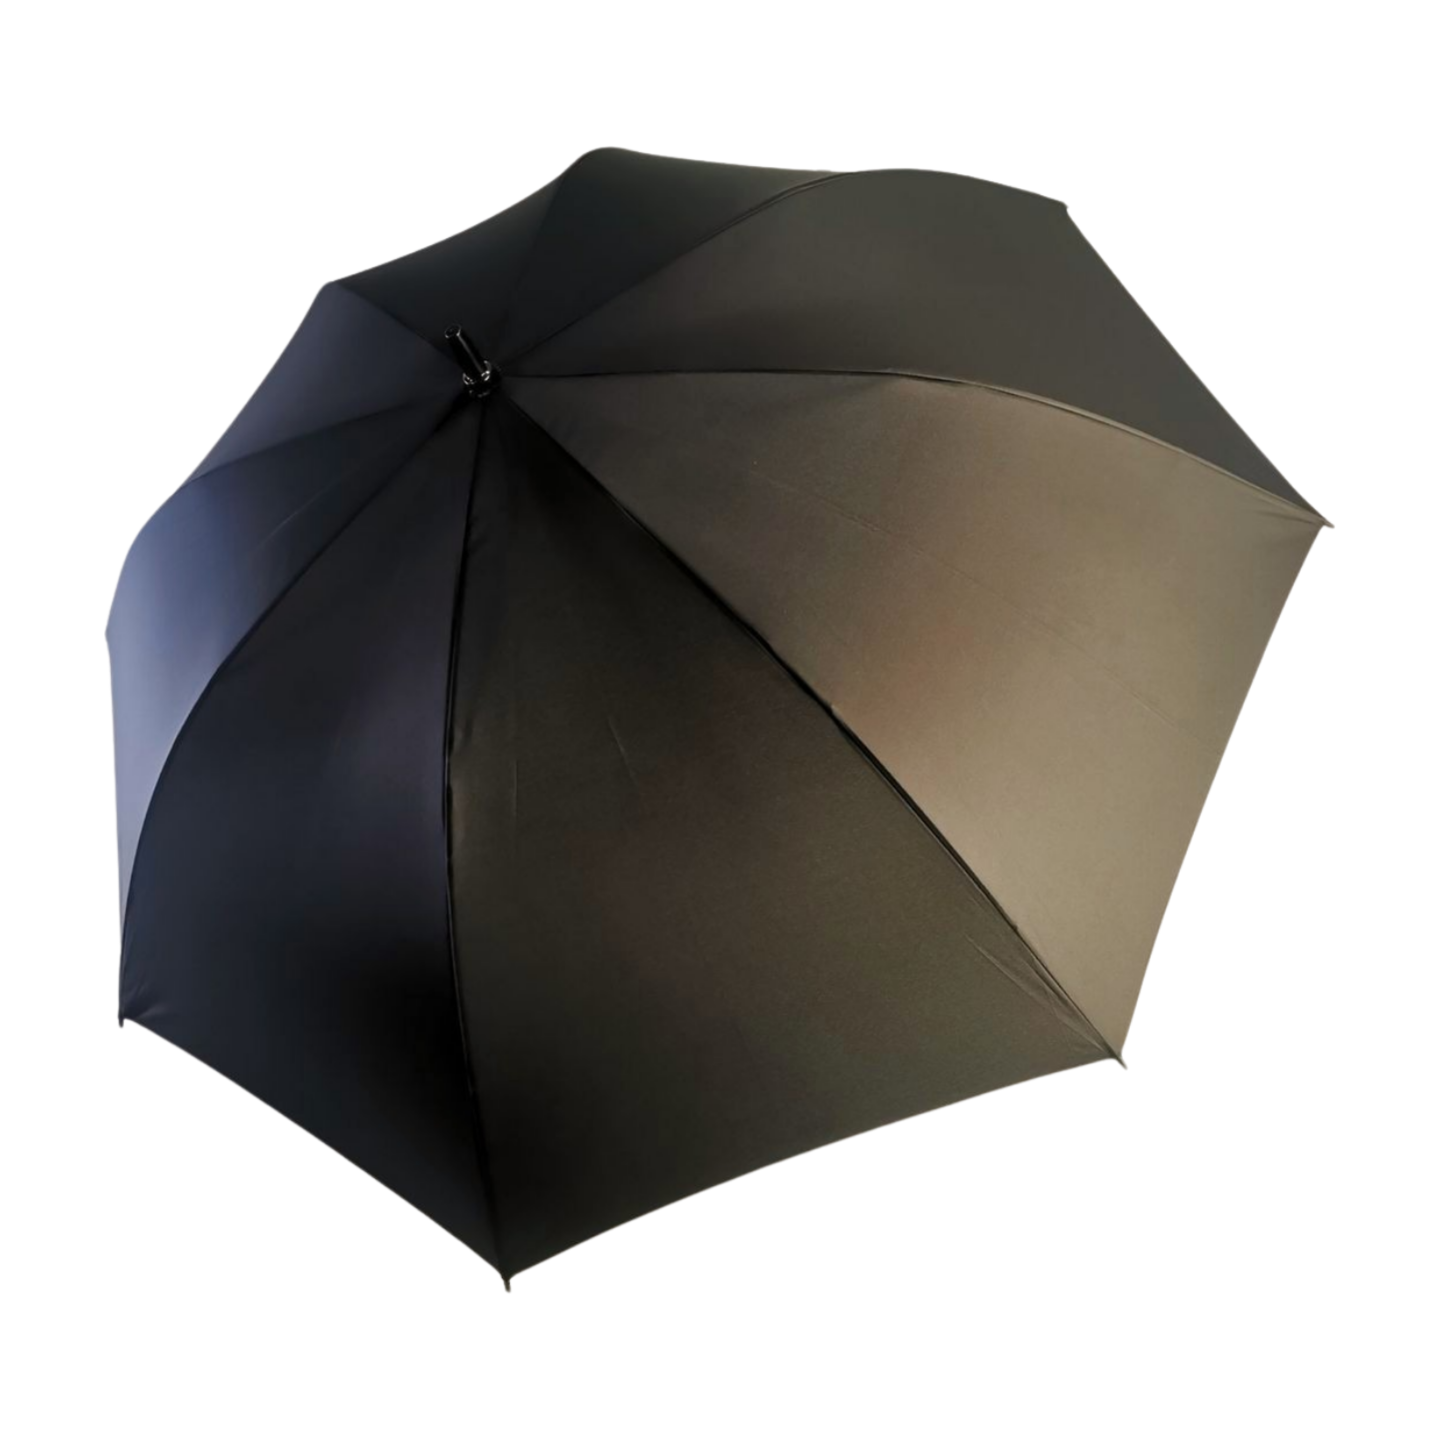 https://www.hodaumbrella.com/60-golf-umbrel…biznes-style-product/